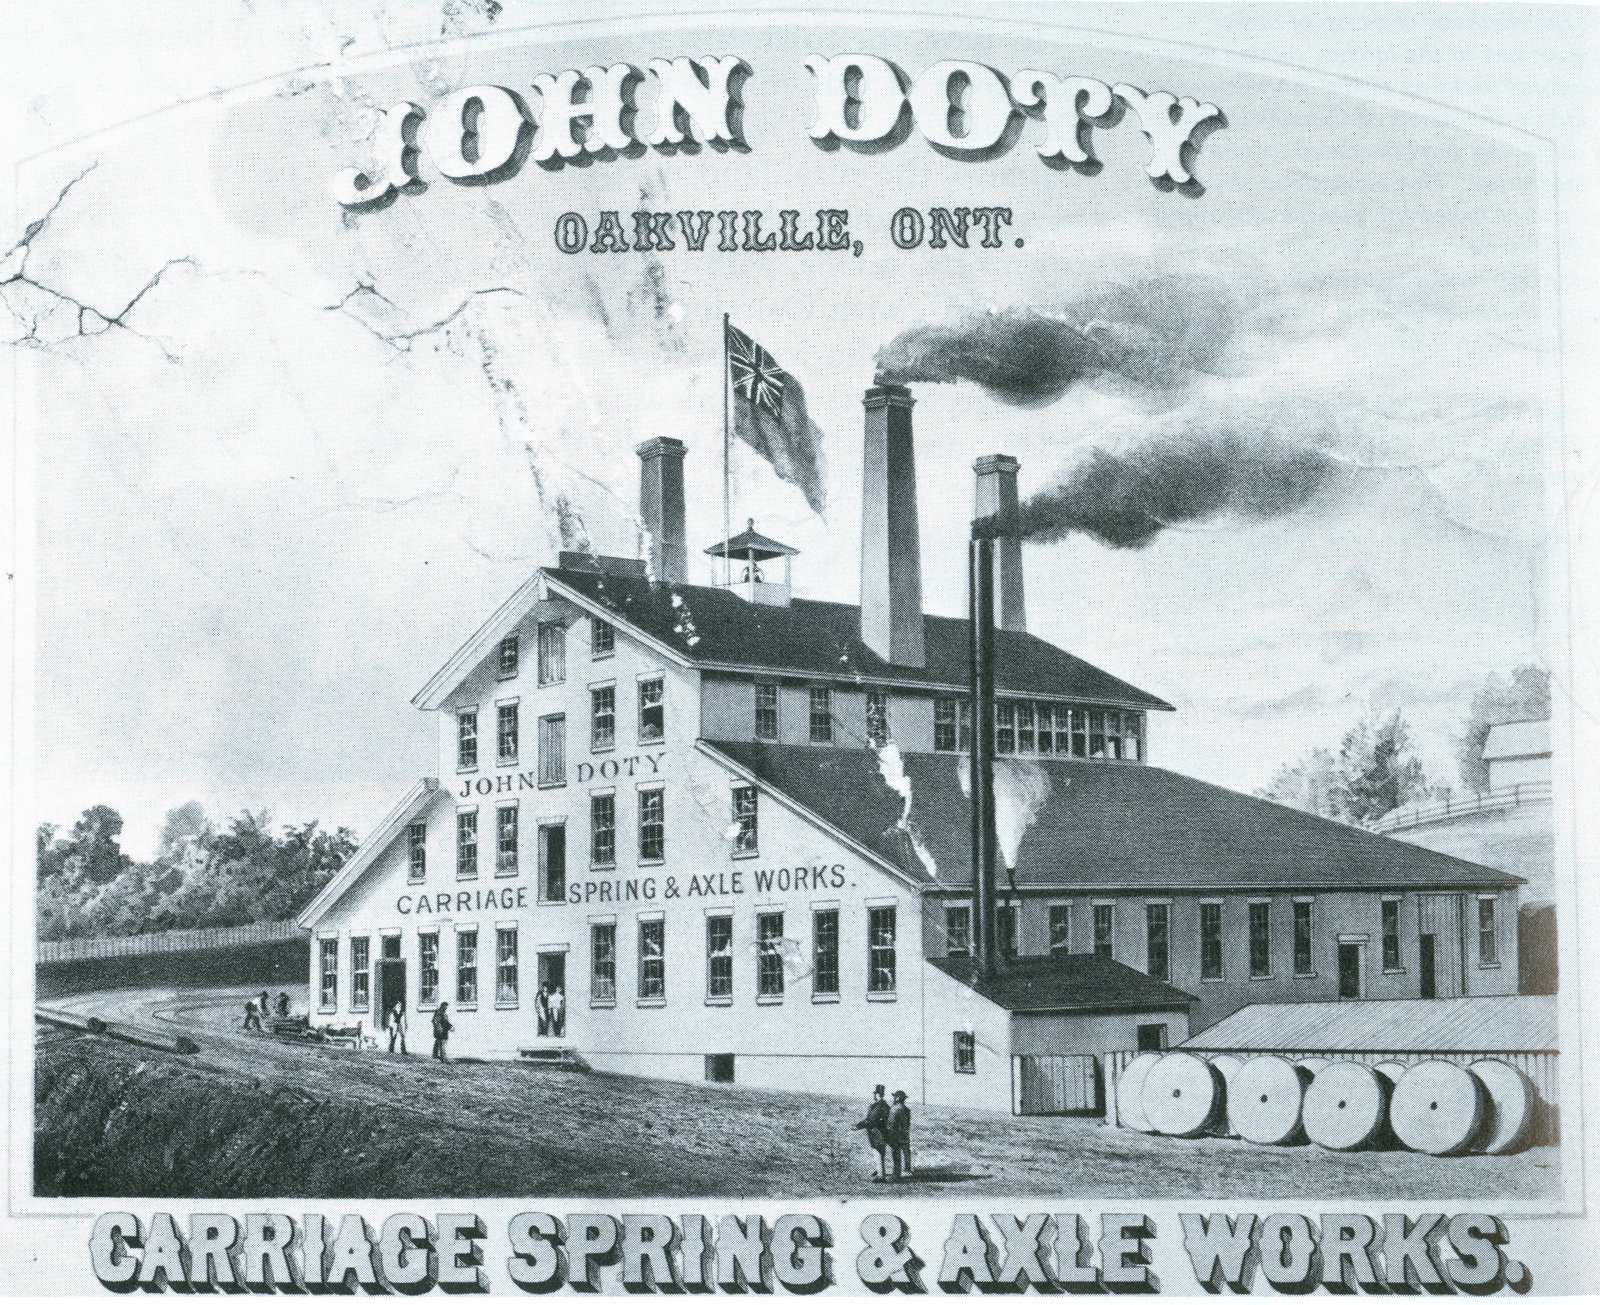 John Doty Carriage Spring & Axle Works
